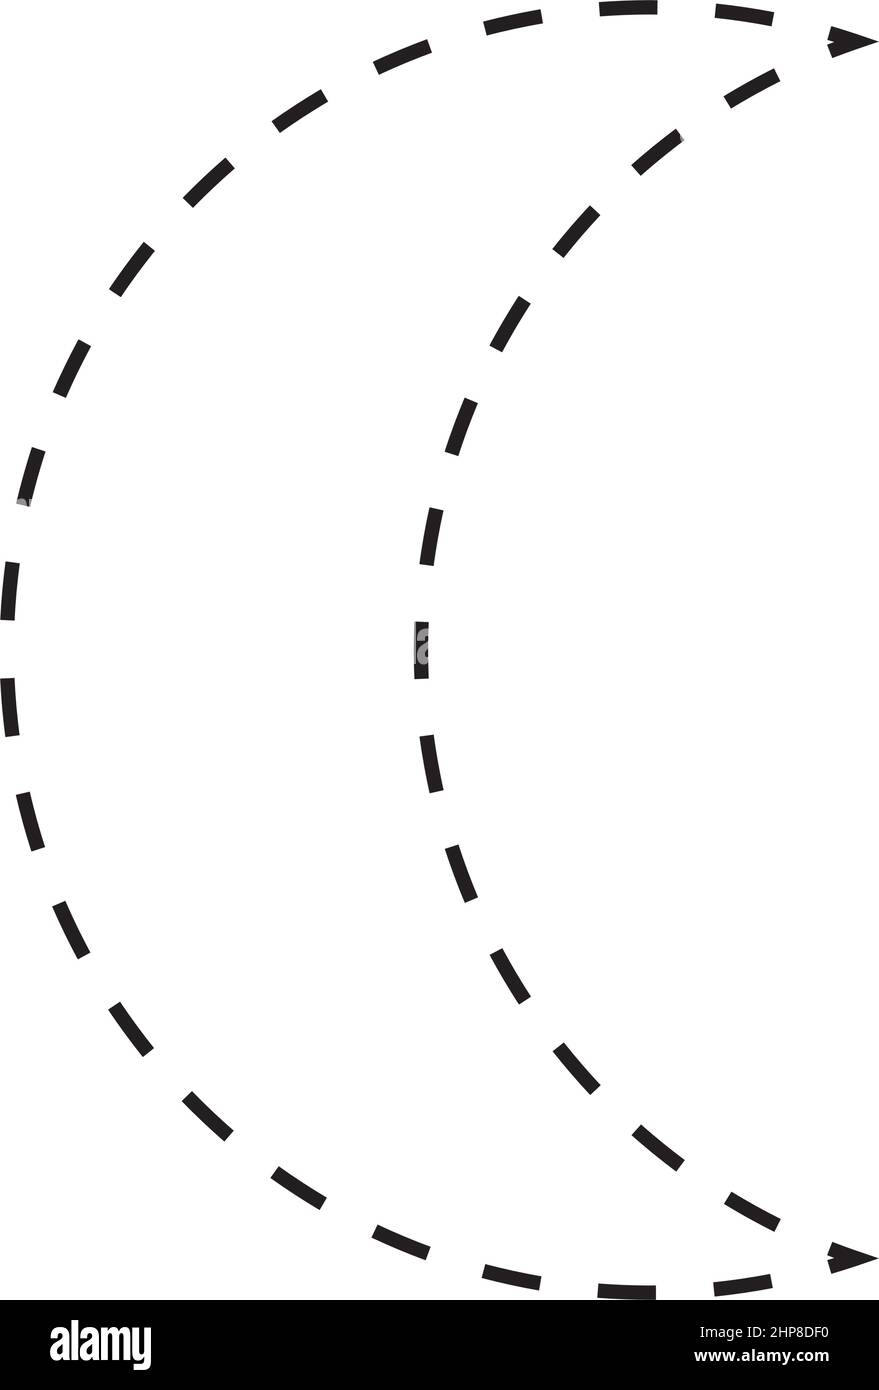 Crescent Symbol gestrichelte Form Vektor-Symbol für kreative Grafik-Design-ui-Element in einem Piktogramm Illustration Stock Vektor